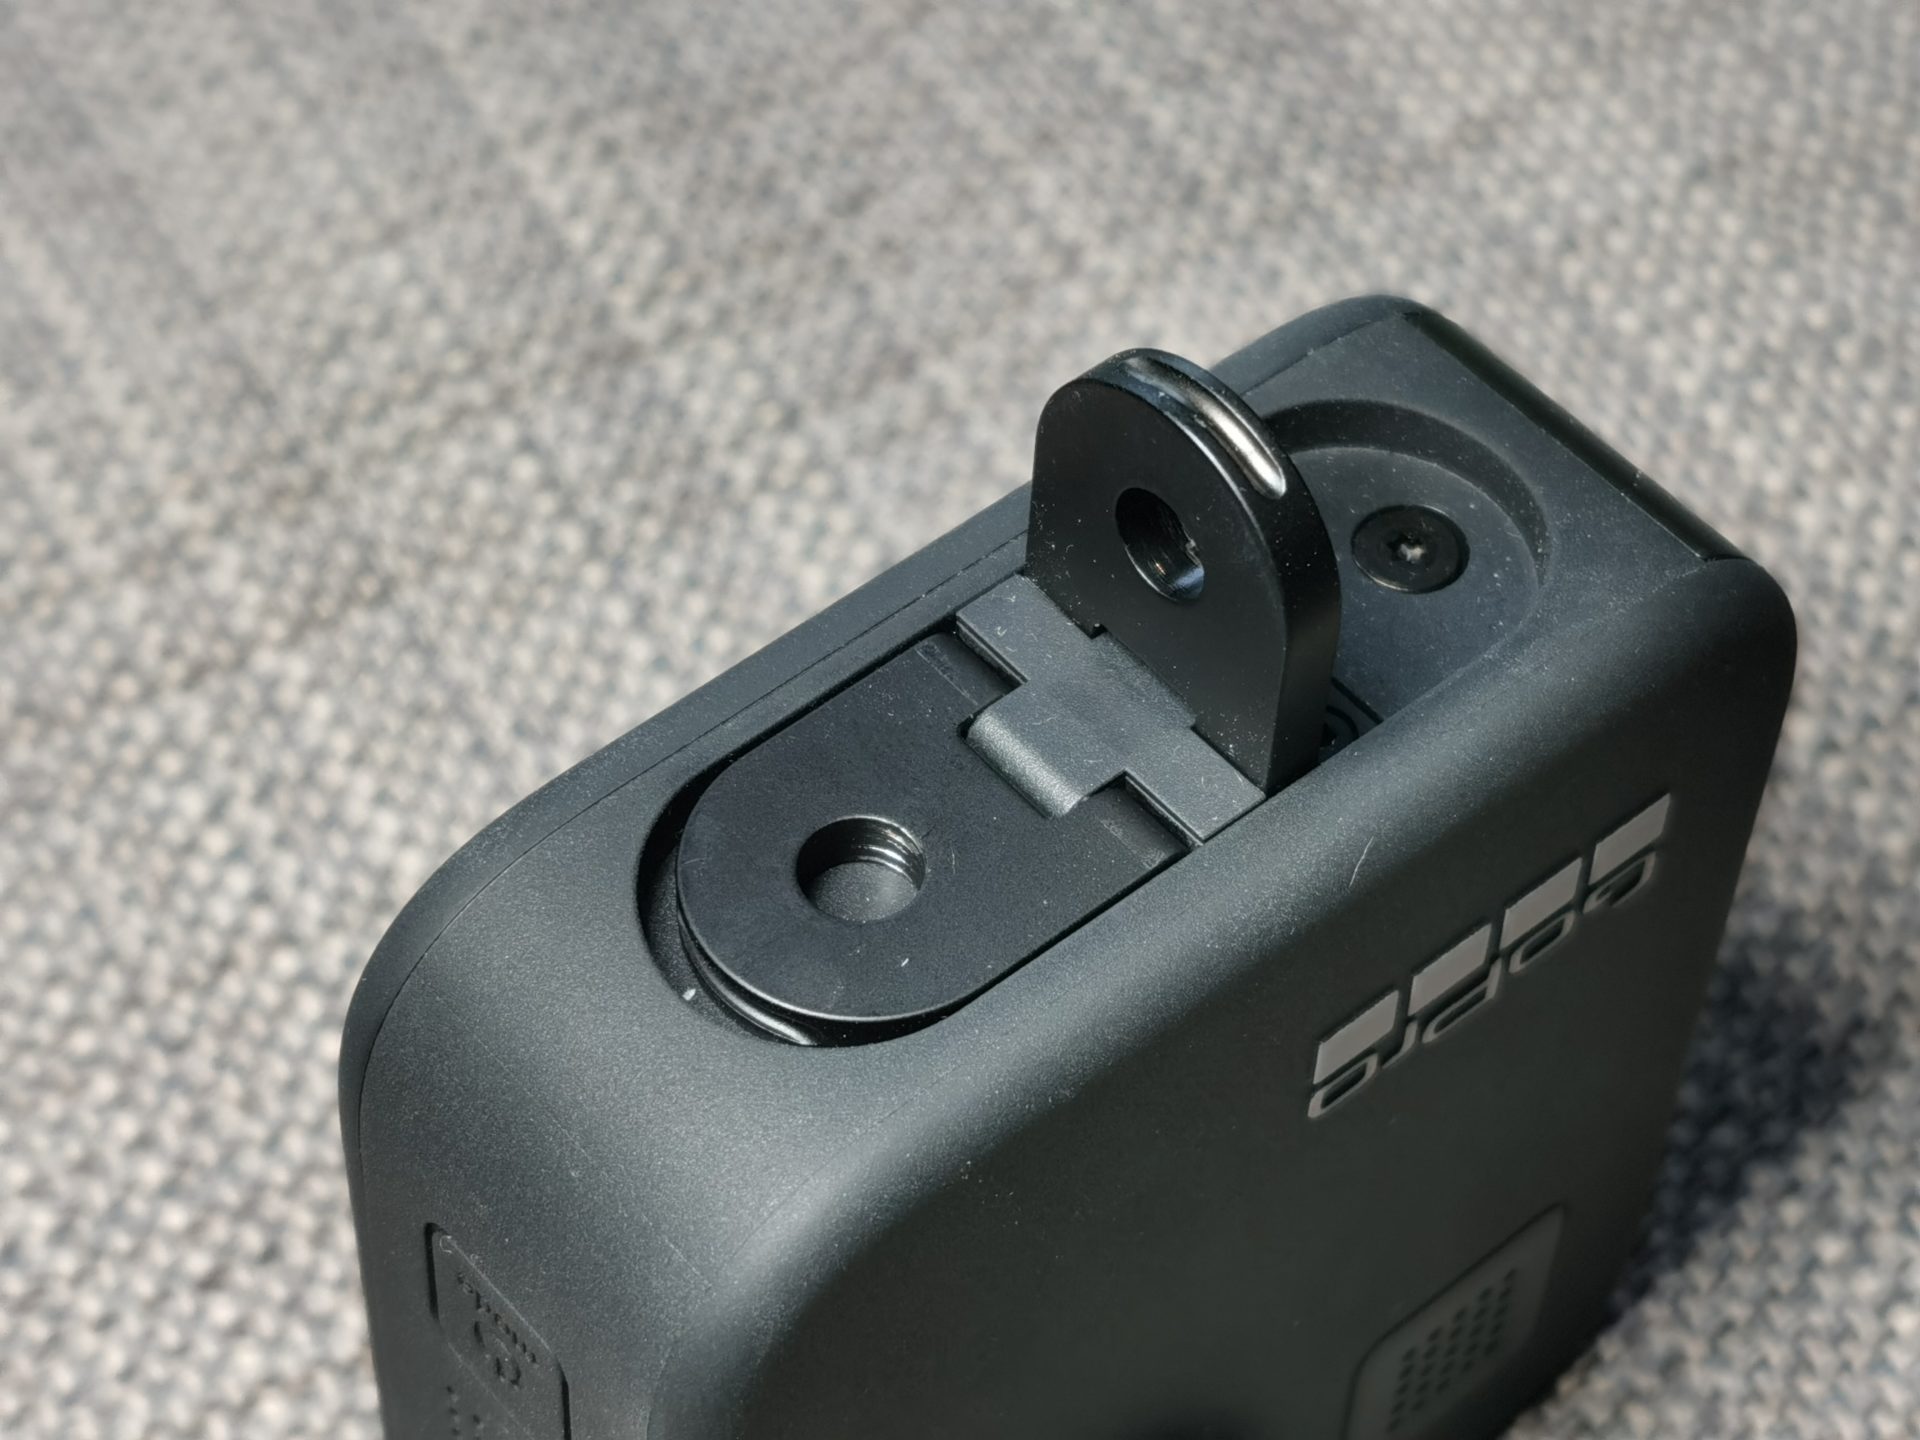 Goondu review: GoPro Max 360 Camera